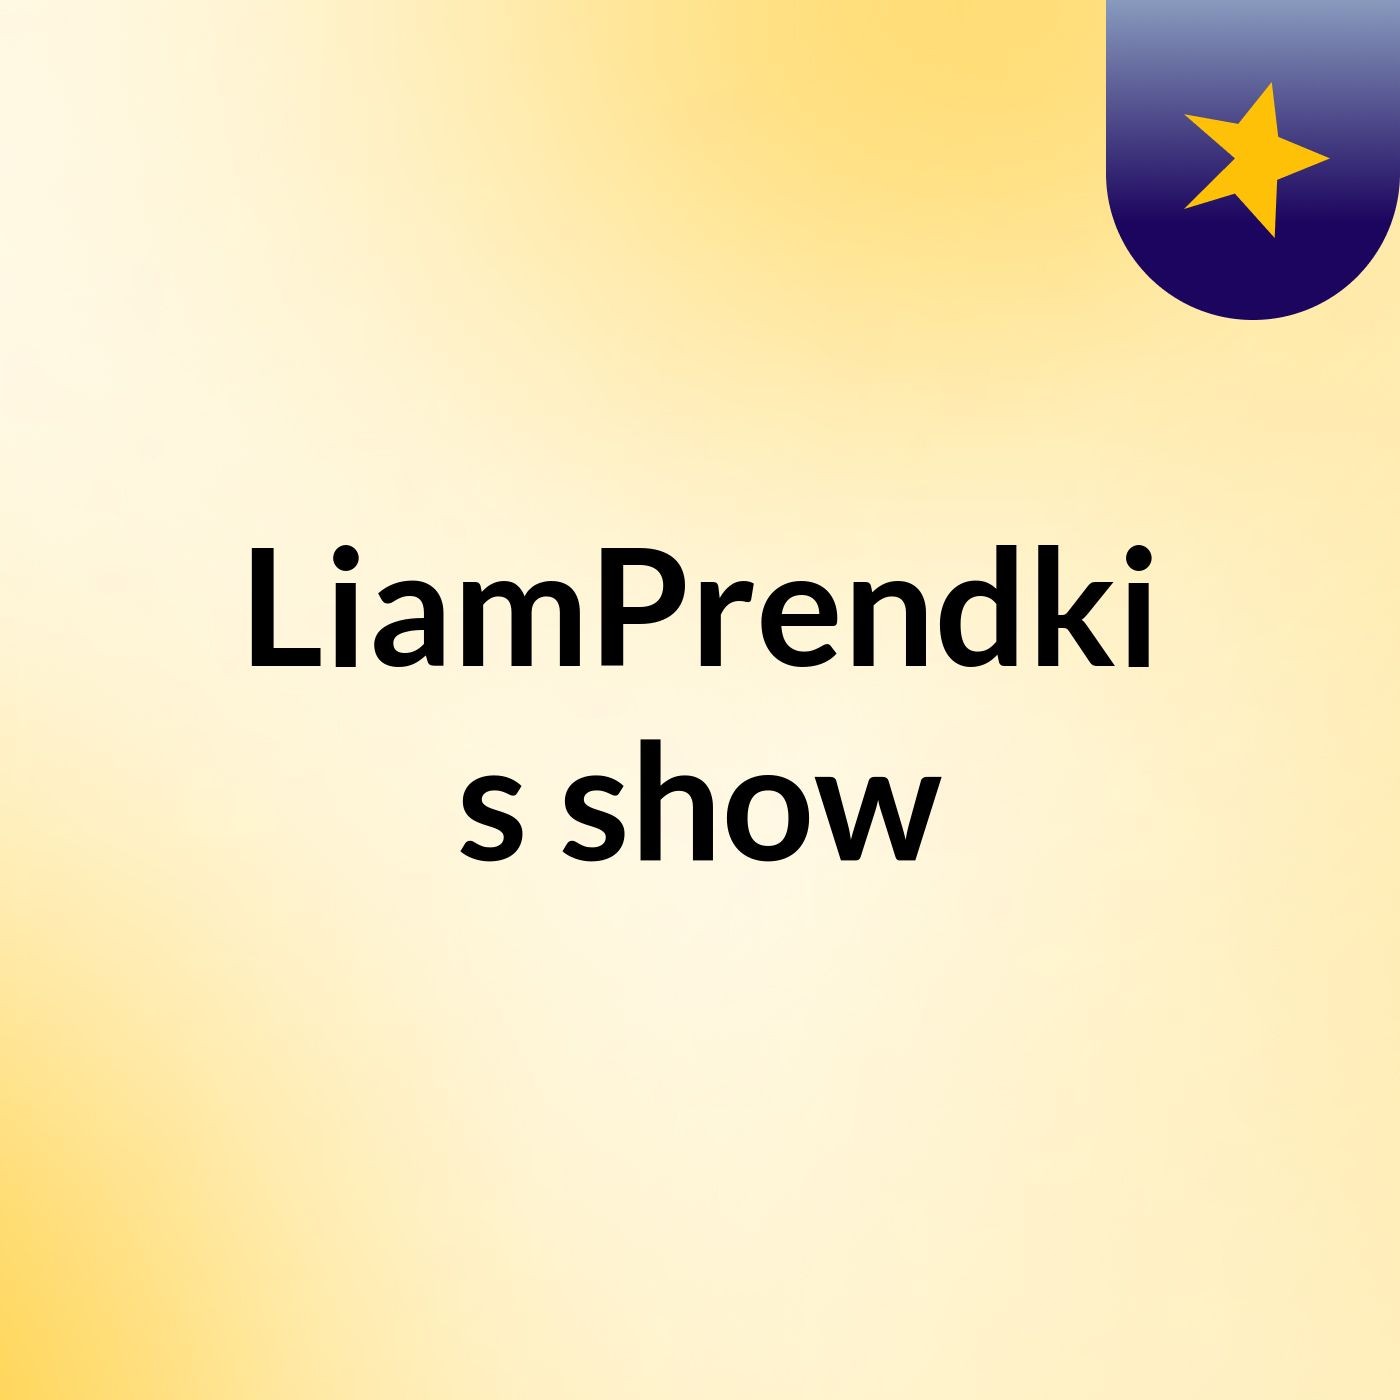 LiamPrendki's show